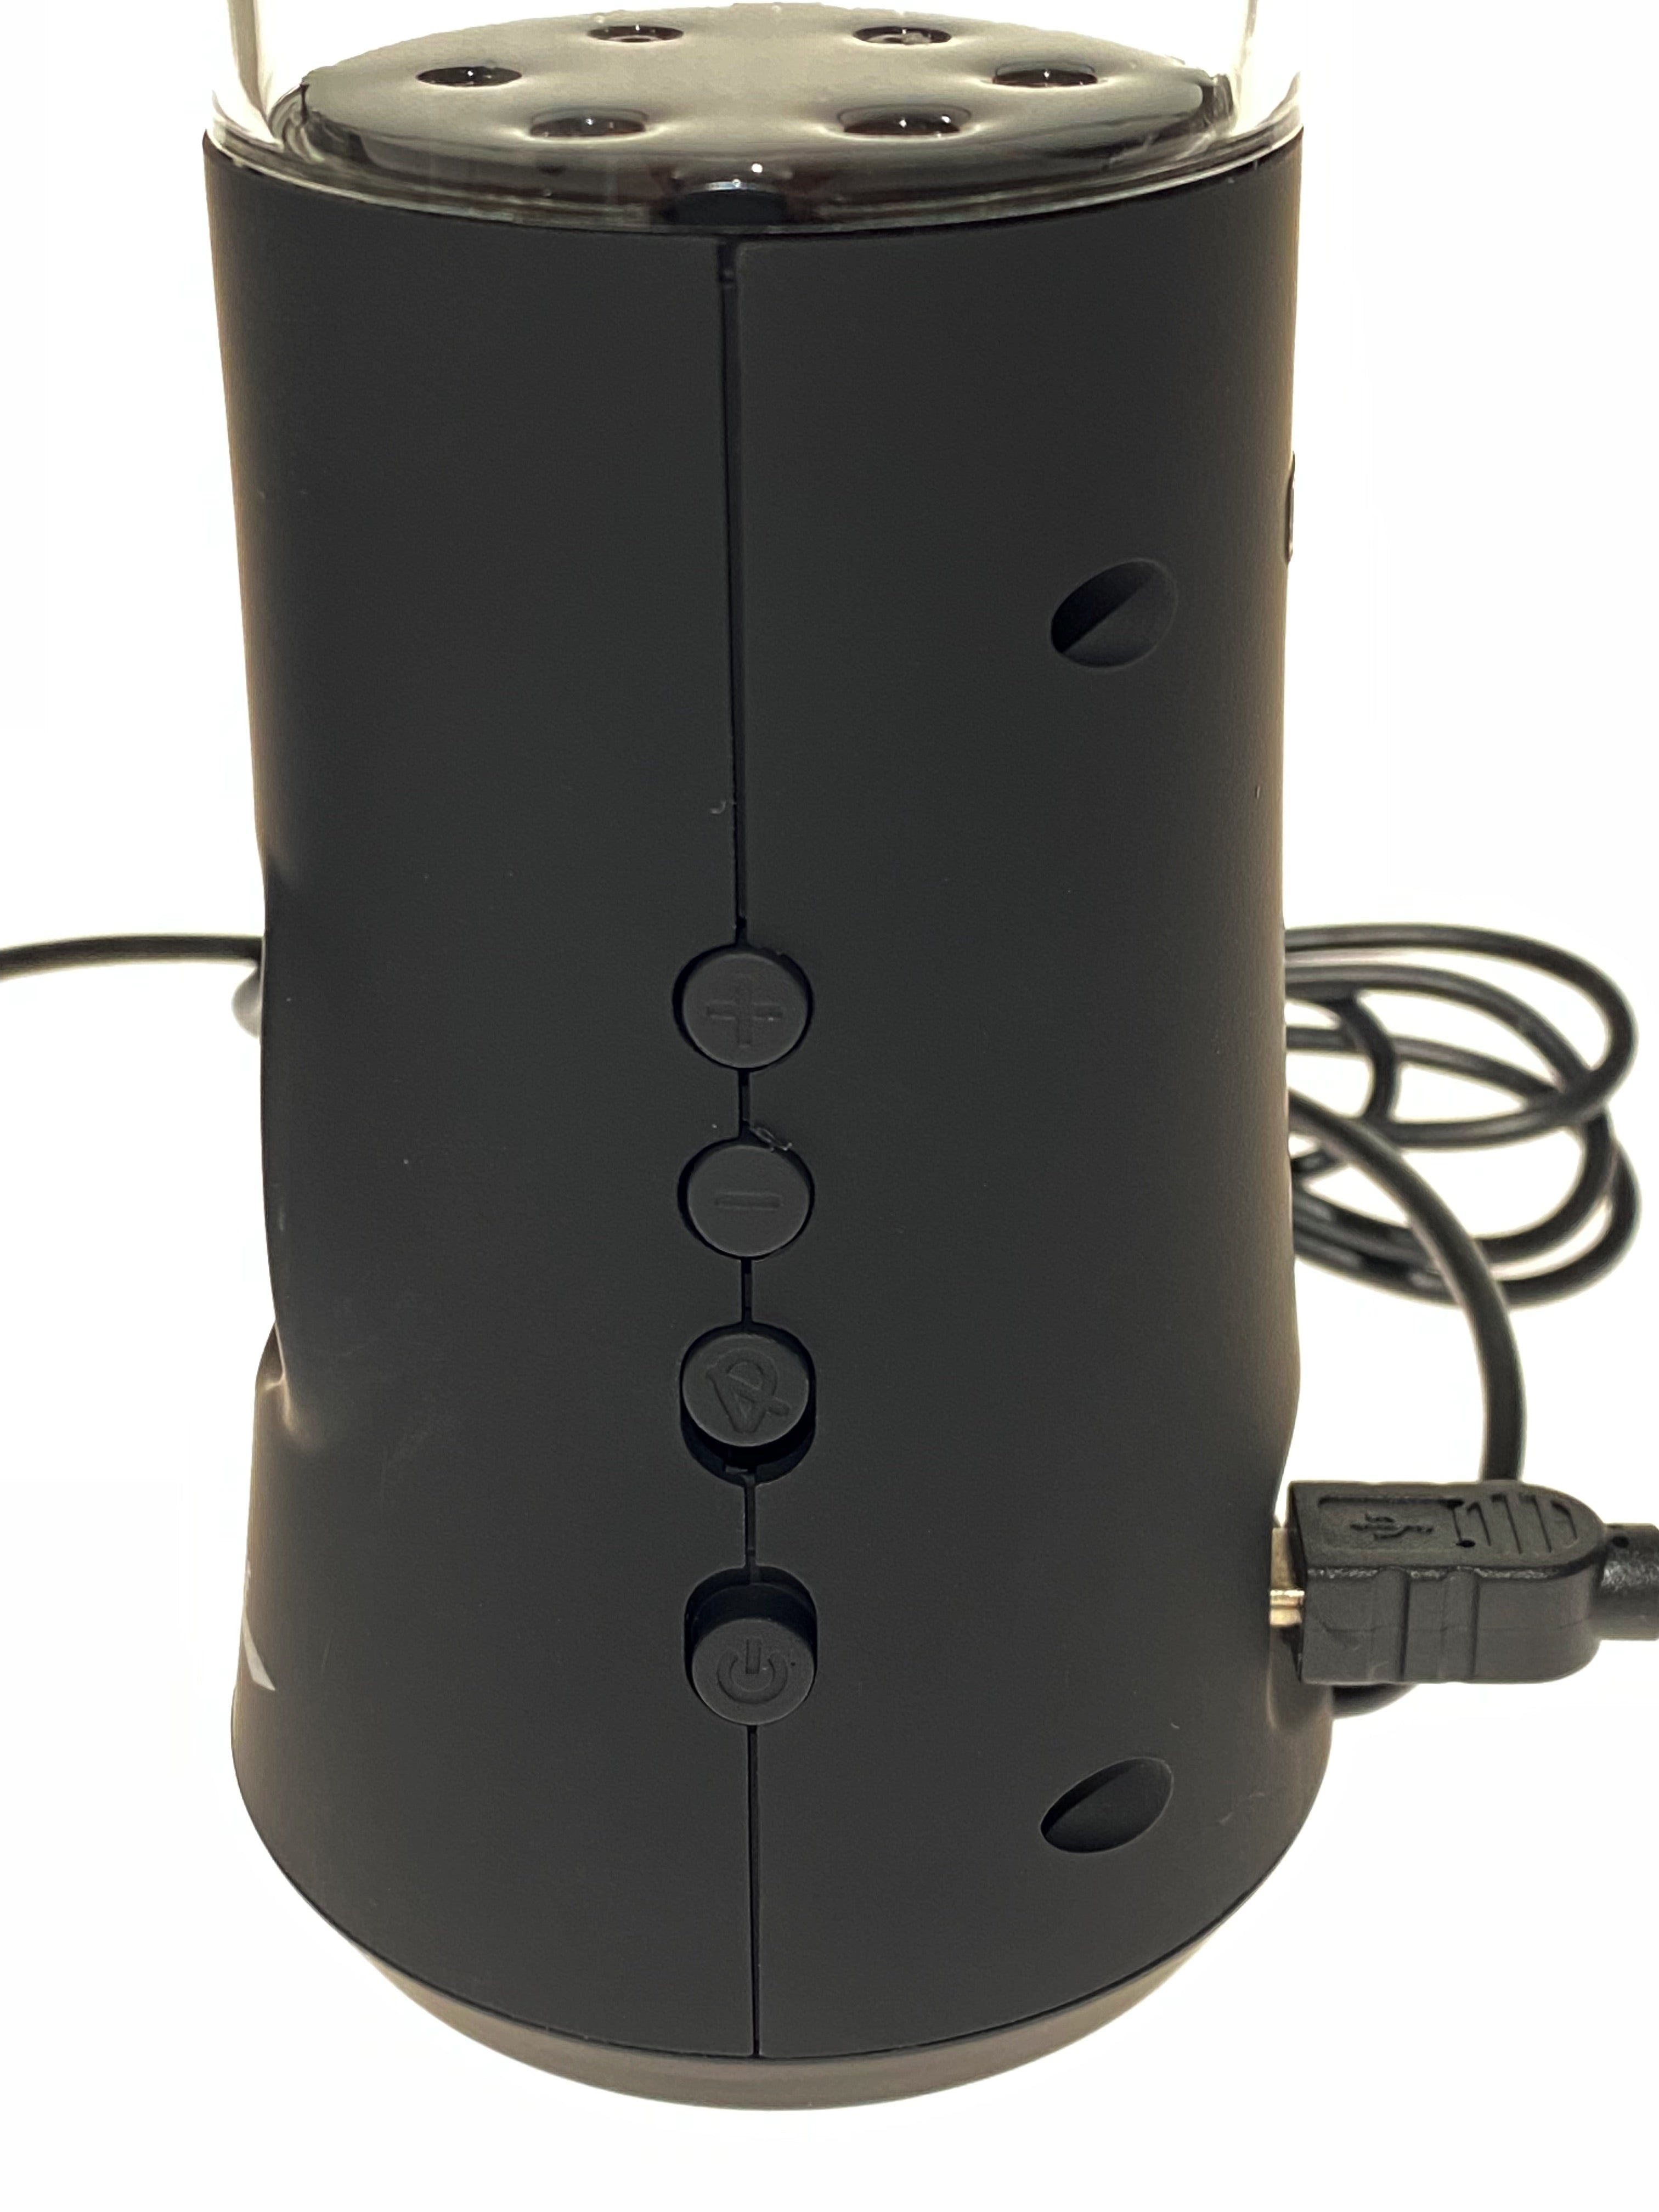 X5 Water Dancing Speaker - Bluetooth    